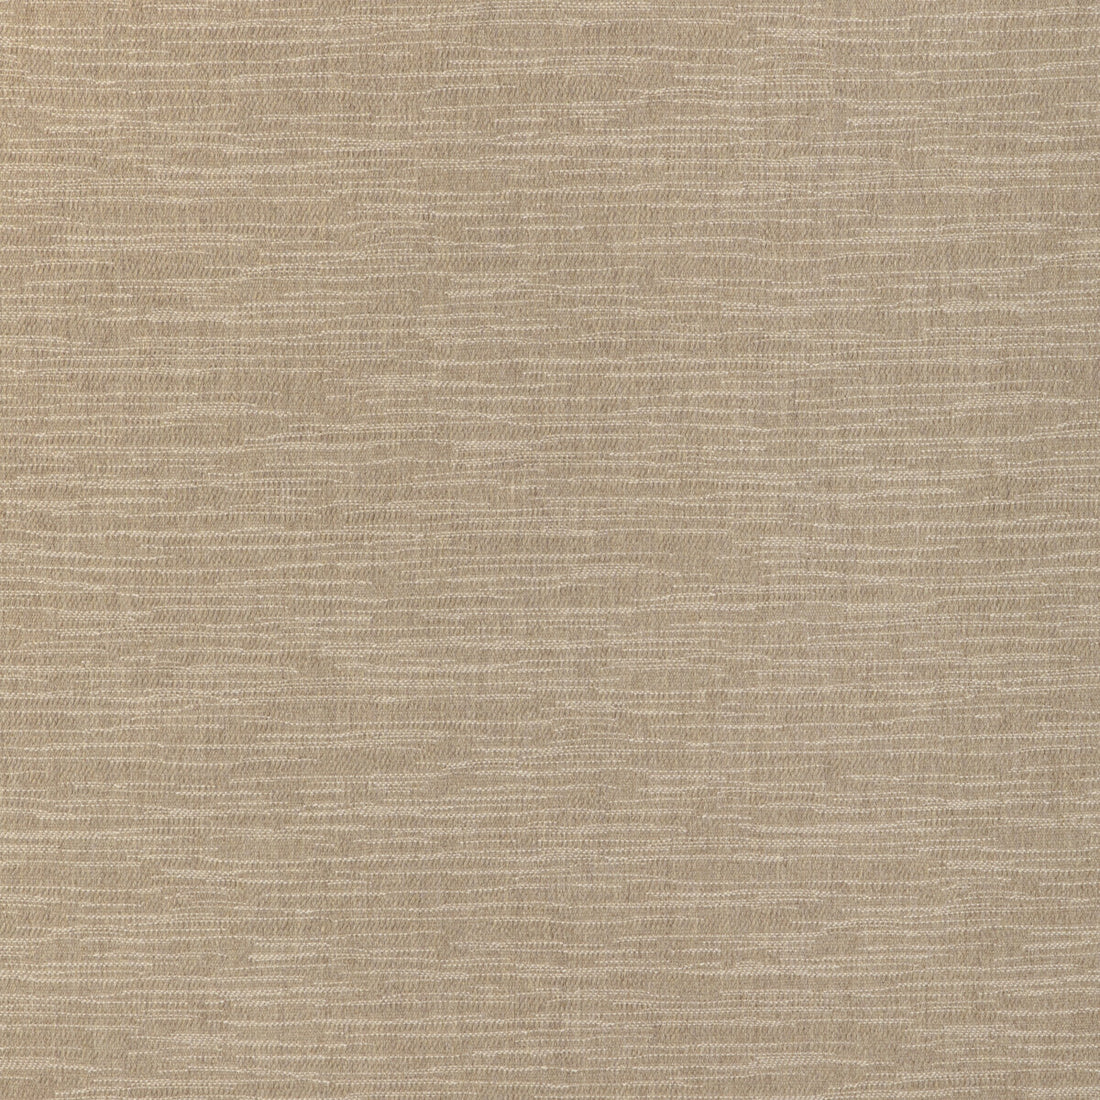 La Mer Weave fabric in linen color - pattern 8024113.16.0 - by Brunschwig &amp; Fils in the Les Ensembliers L&